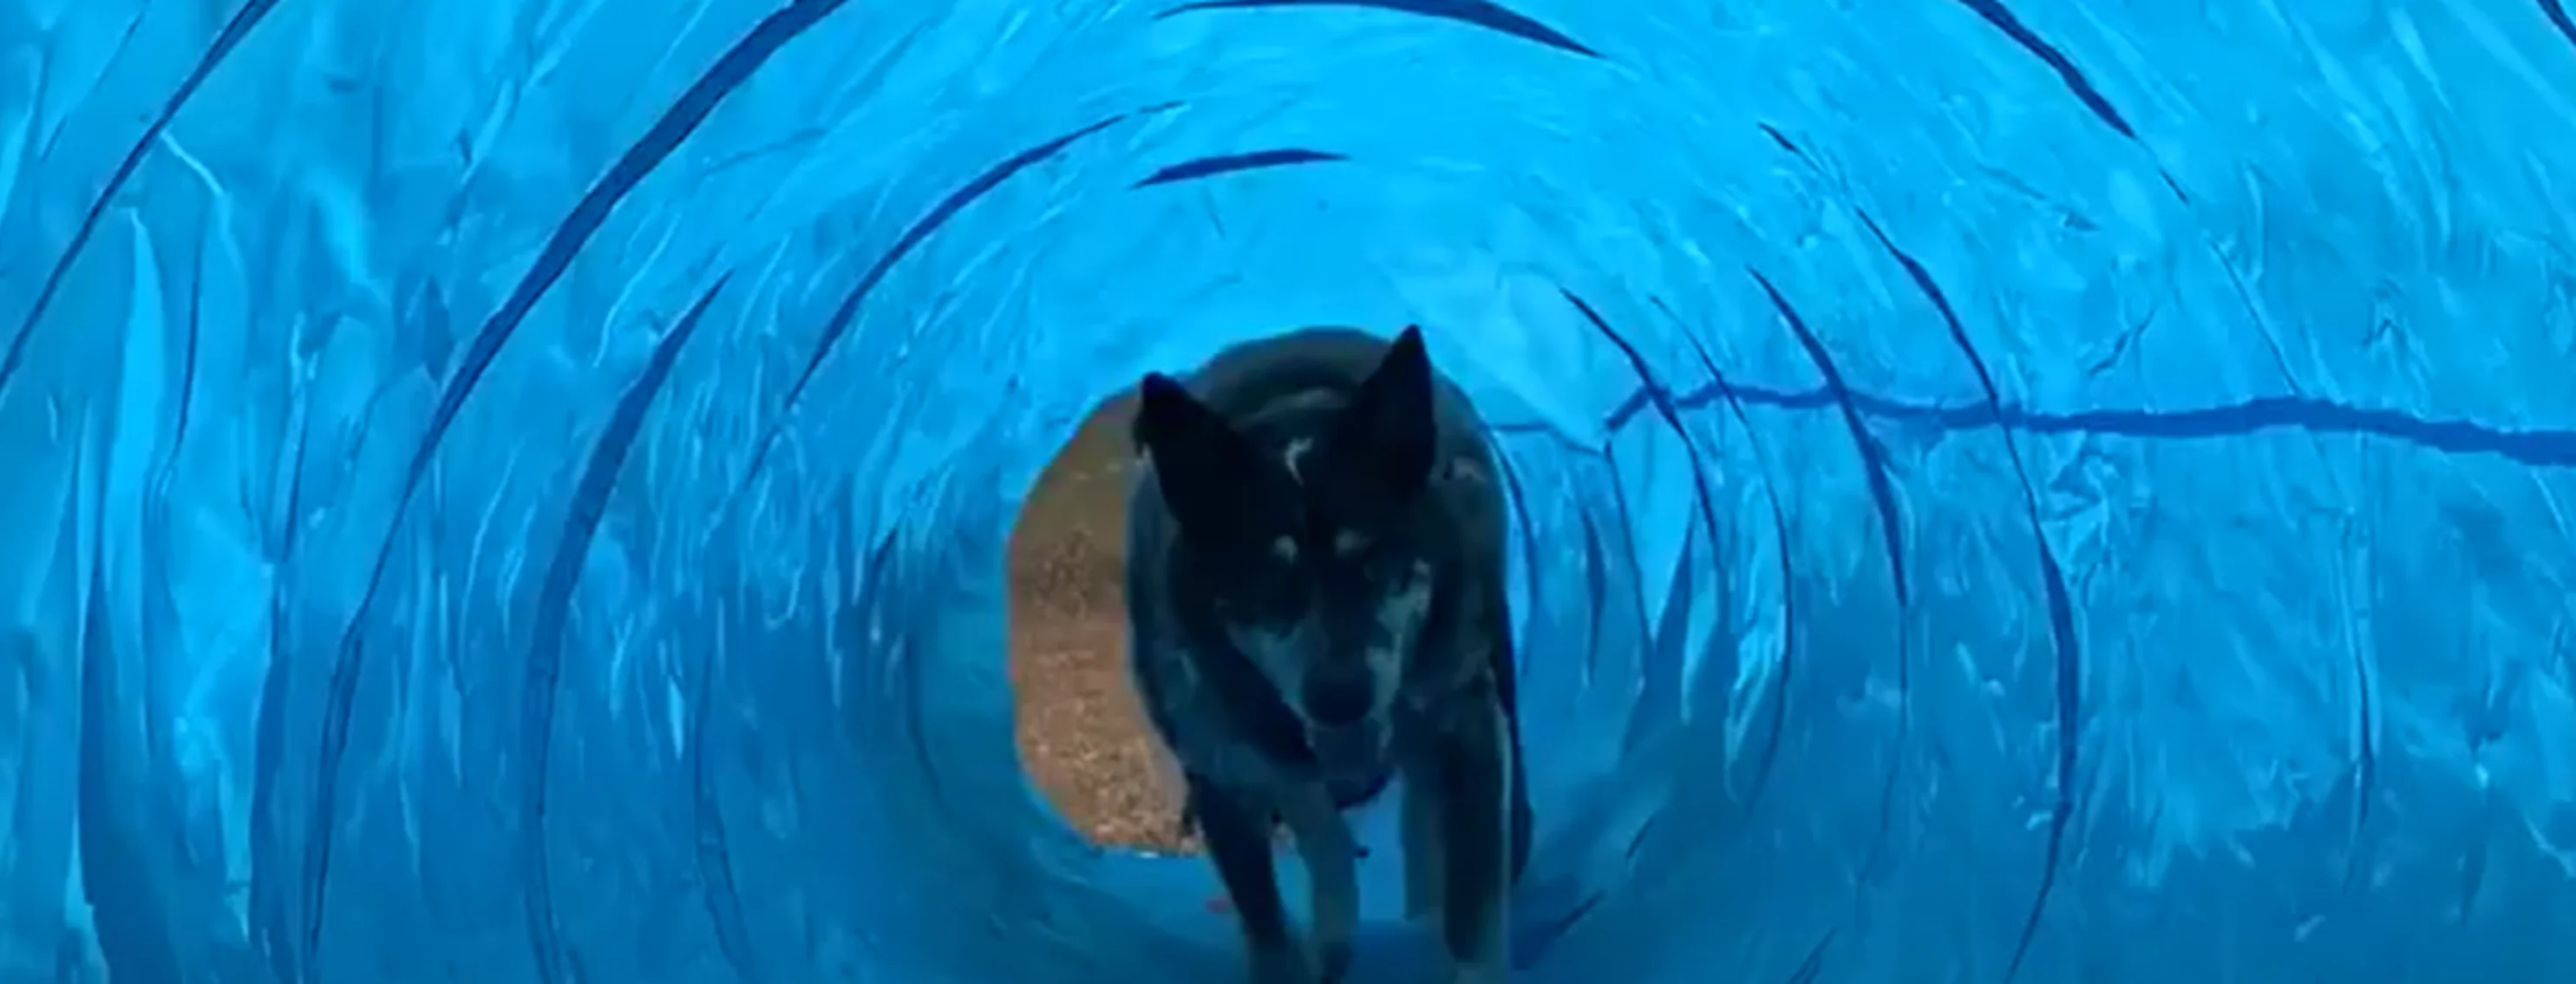 Dog running through a blue tunnel